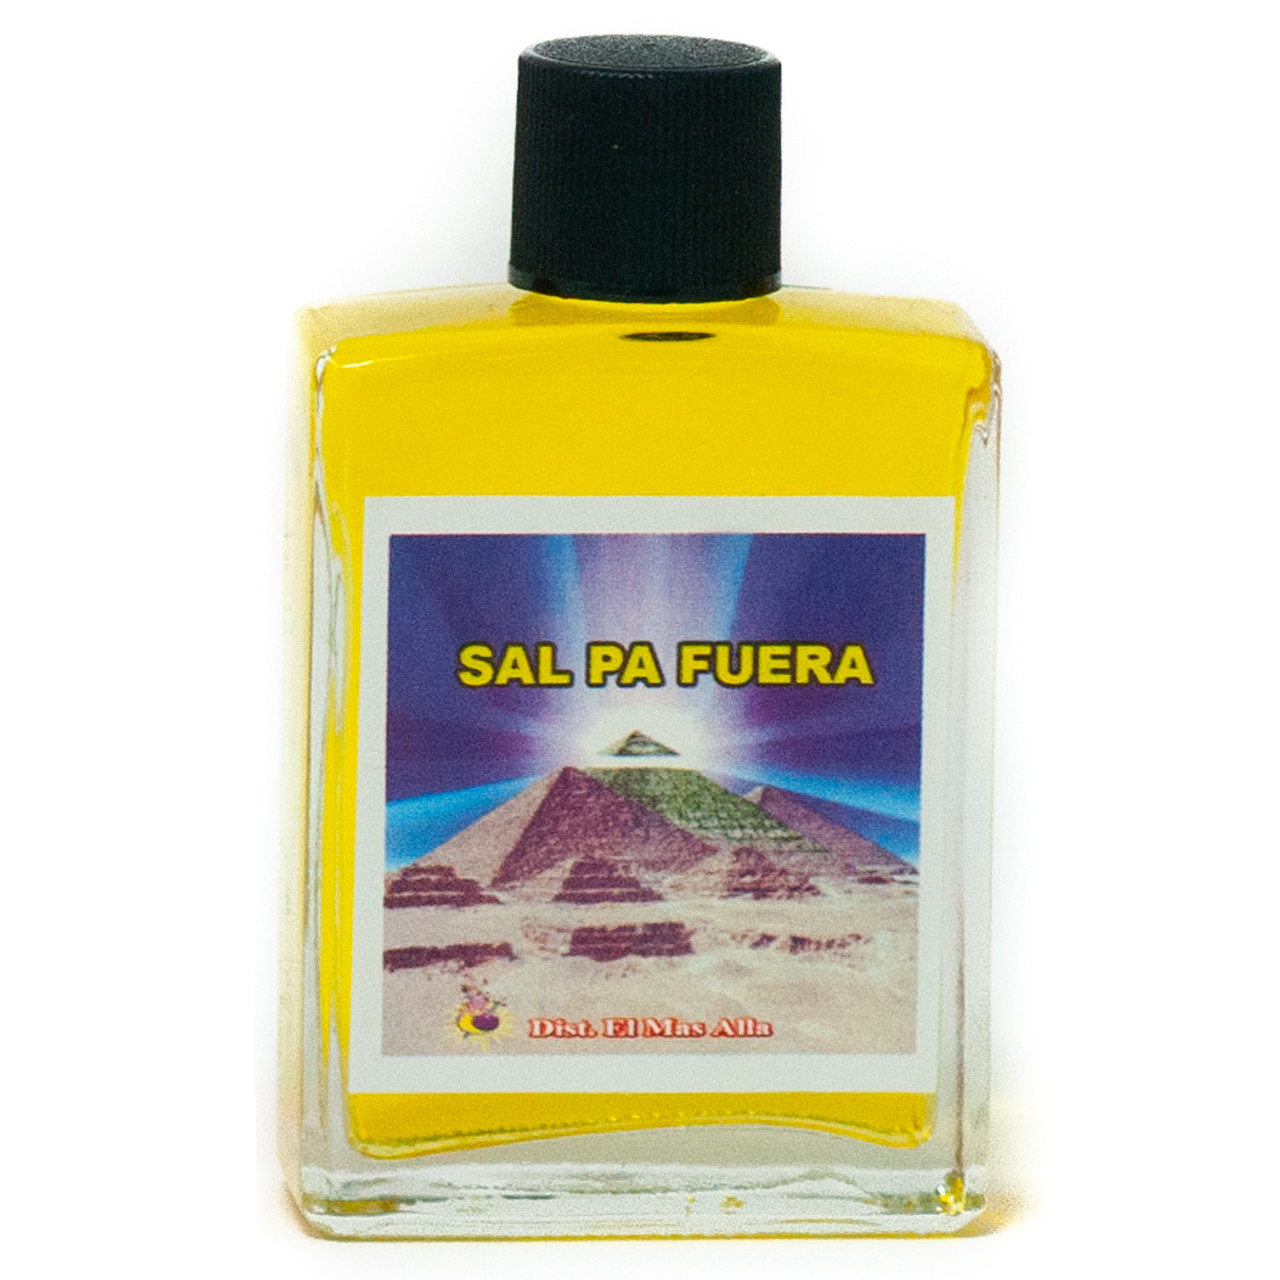 Perfume Sal Pa Fuera - Get Out Perfume